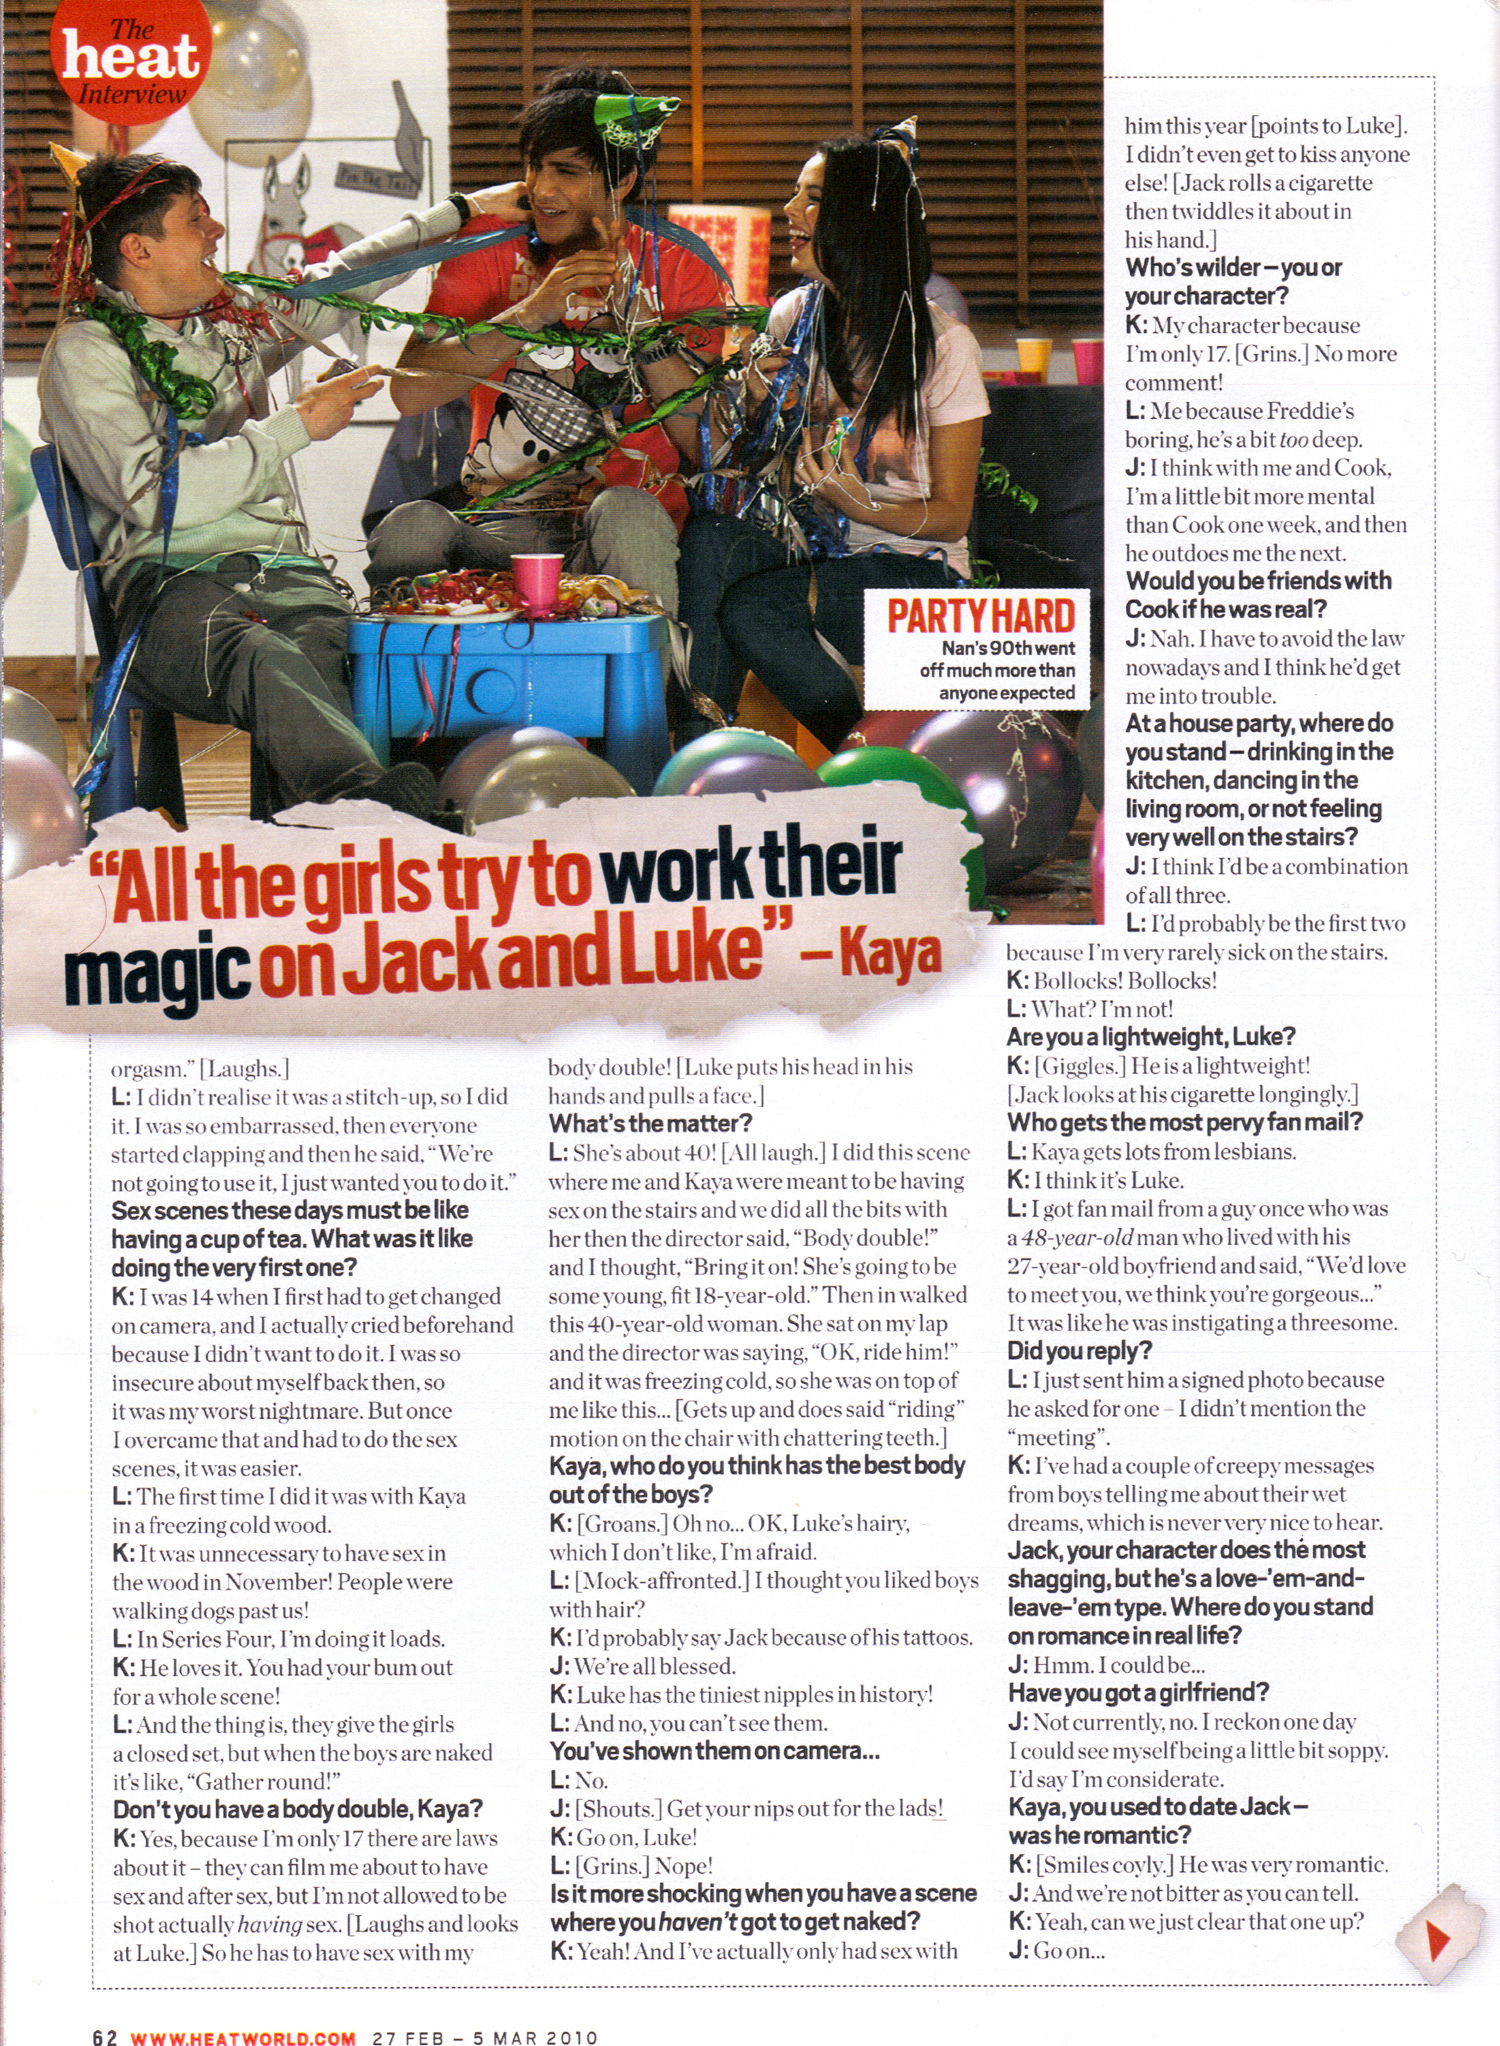 Kaya/Luke/Jack - Heat Magazine.